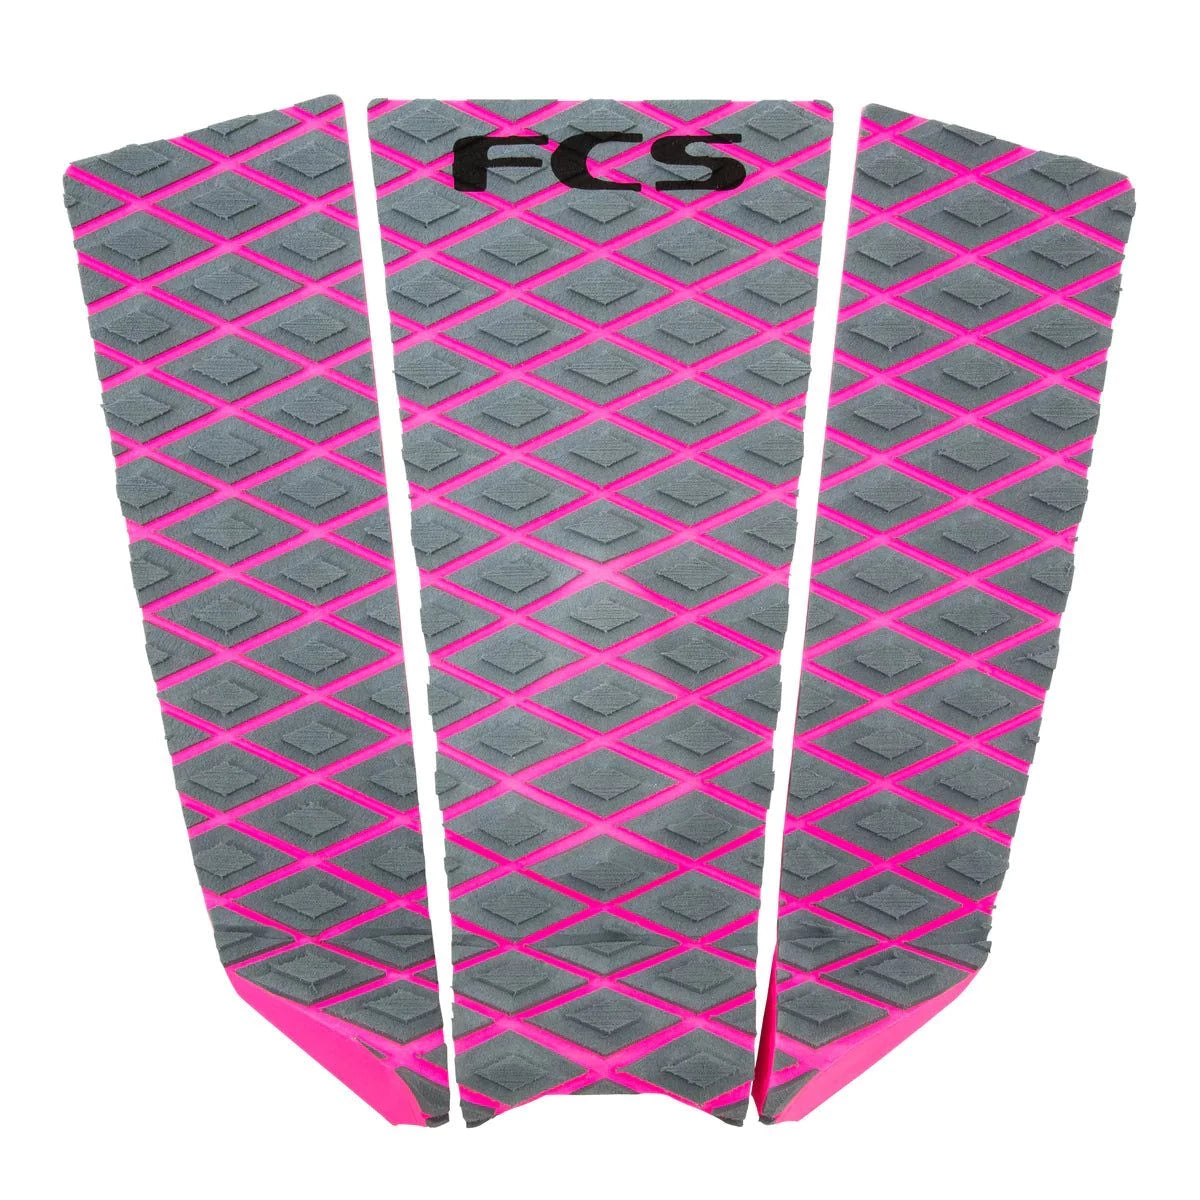 FCS Sally Fitzgibbons Traction-FCS-fcs,fcs fins,FCS II,fins,gear,kolohe andino,surfboard,traction